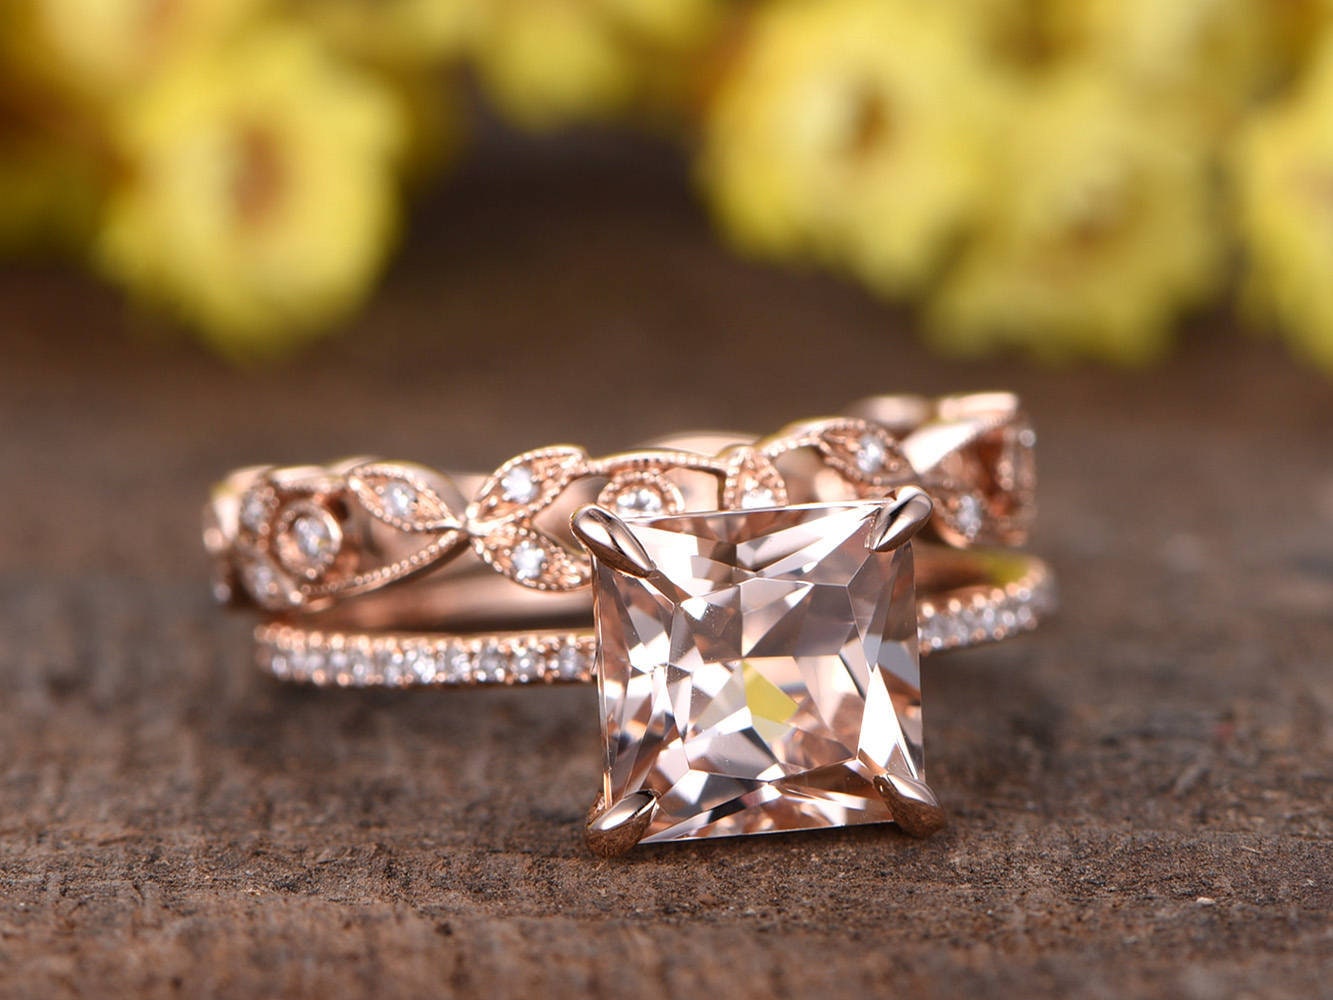 7mm princess cut VS morganite wedding ring set14k rose gold | Etsy